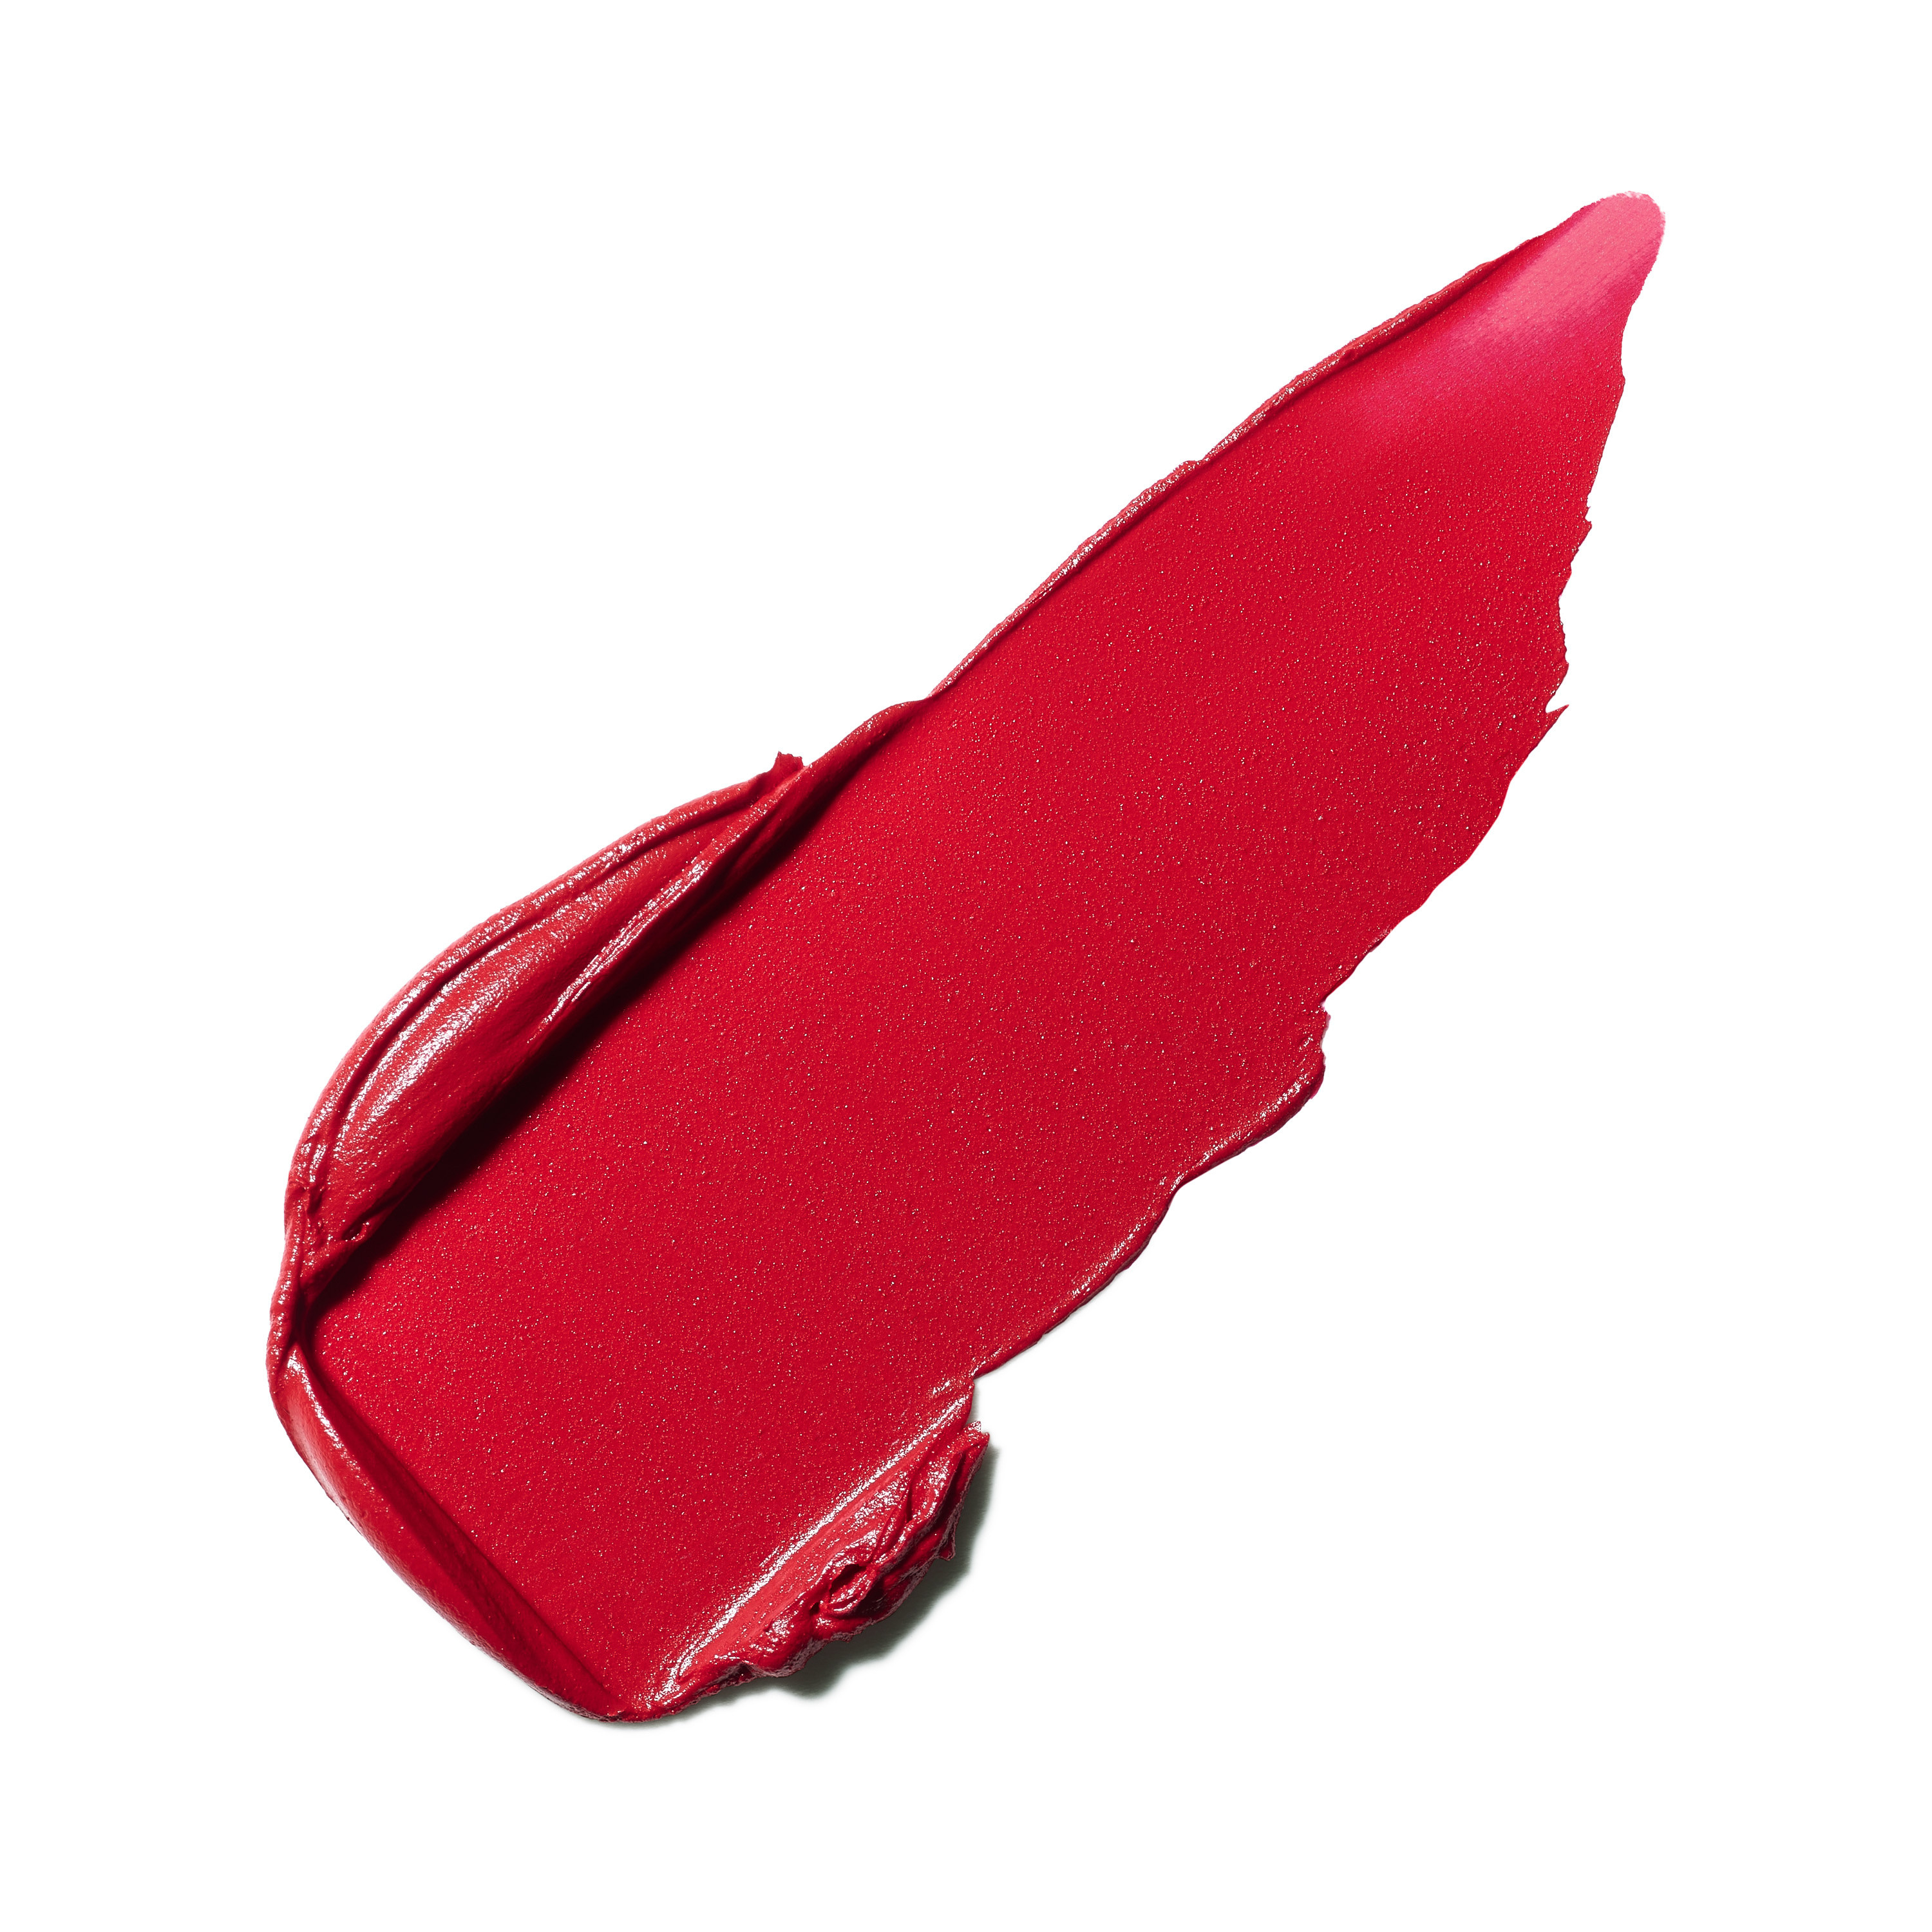 Powder kiss velvet blur slim stick - Ruby new, Red, large image number 1